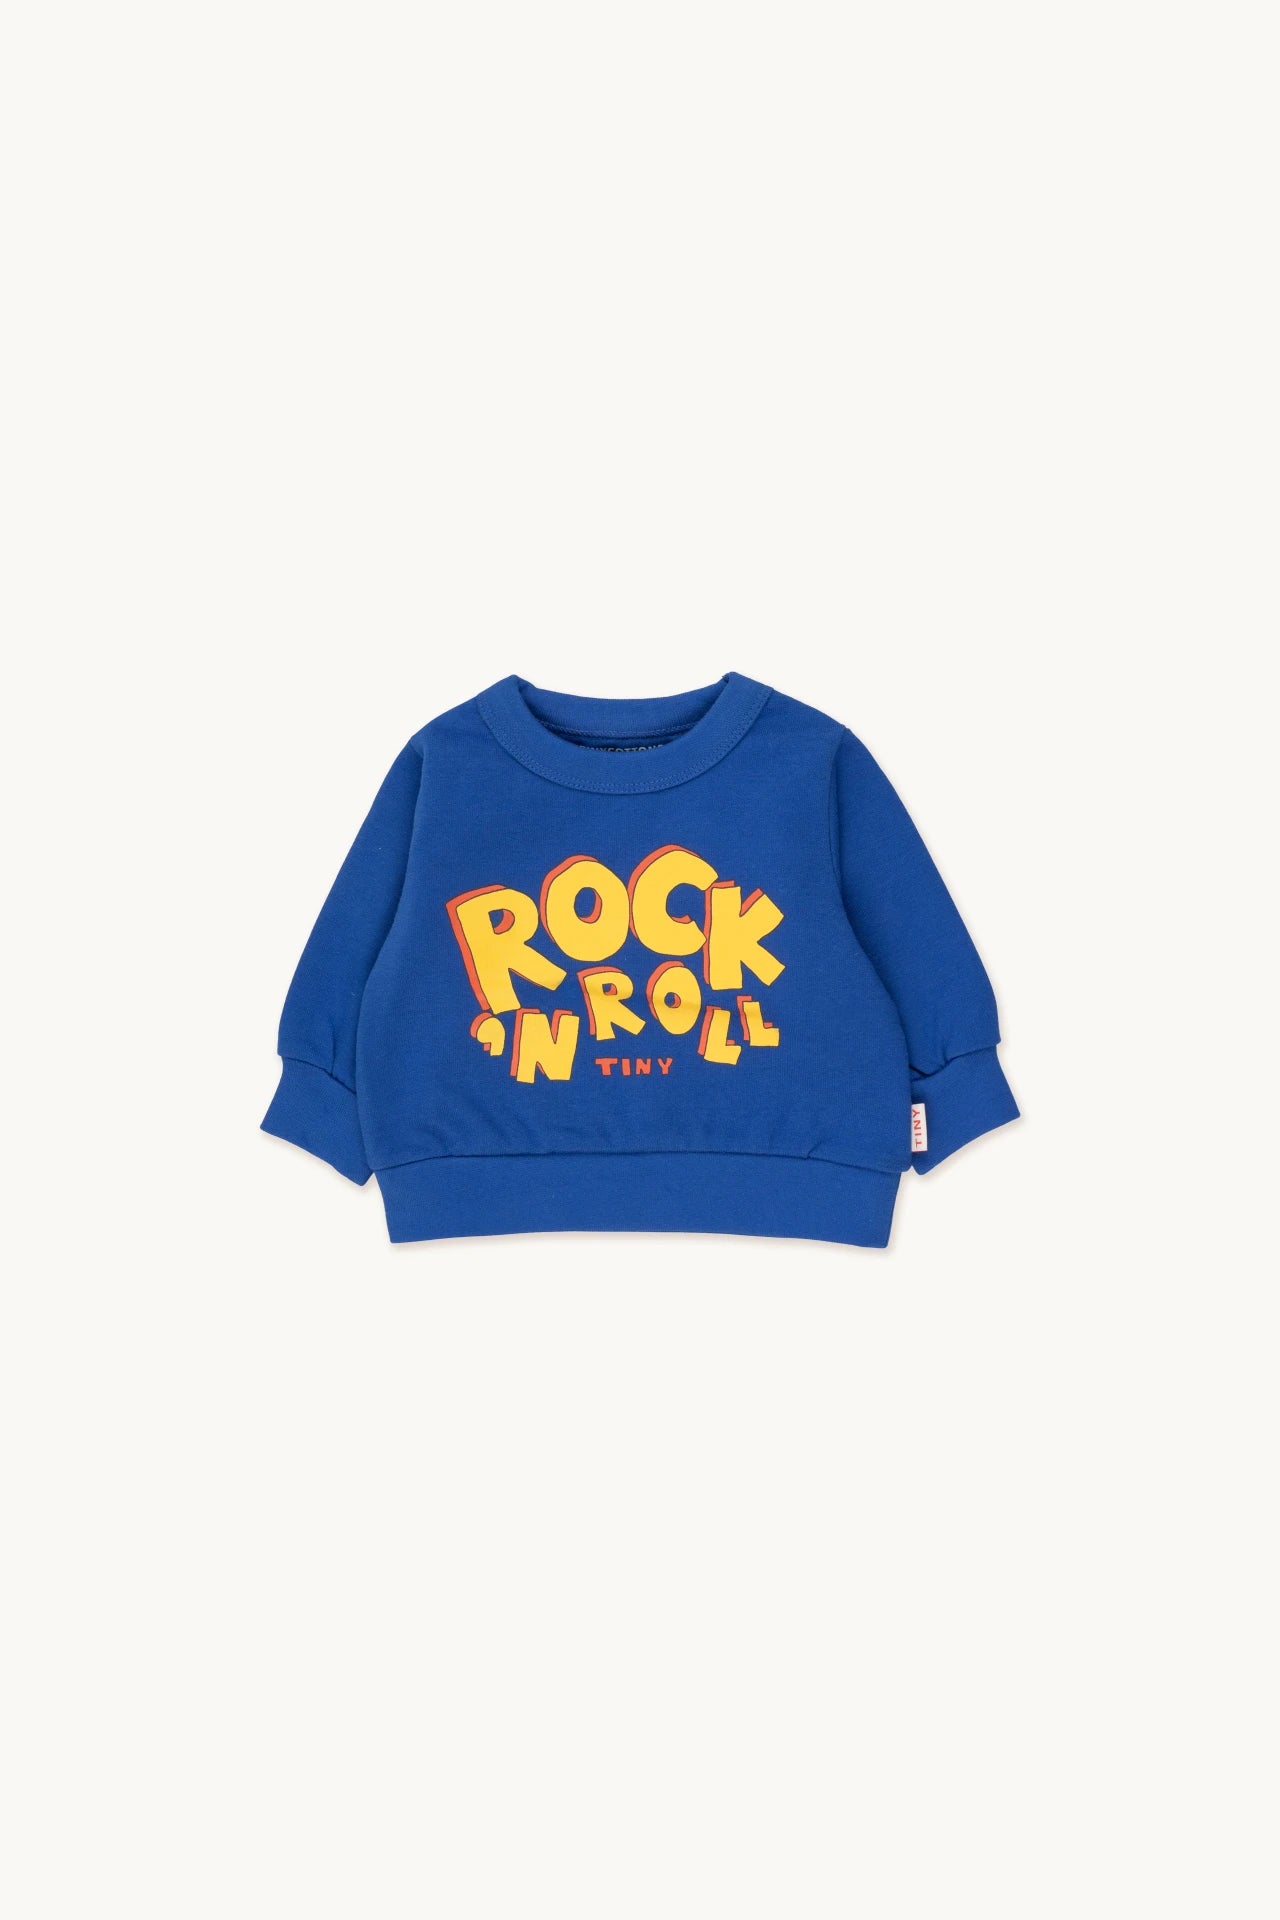 Tiny Cottons - Rock N Roll Sweatshirt